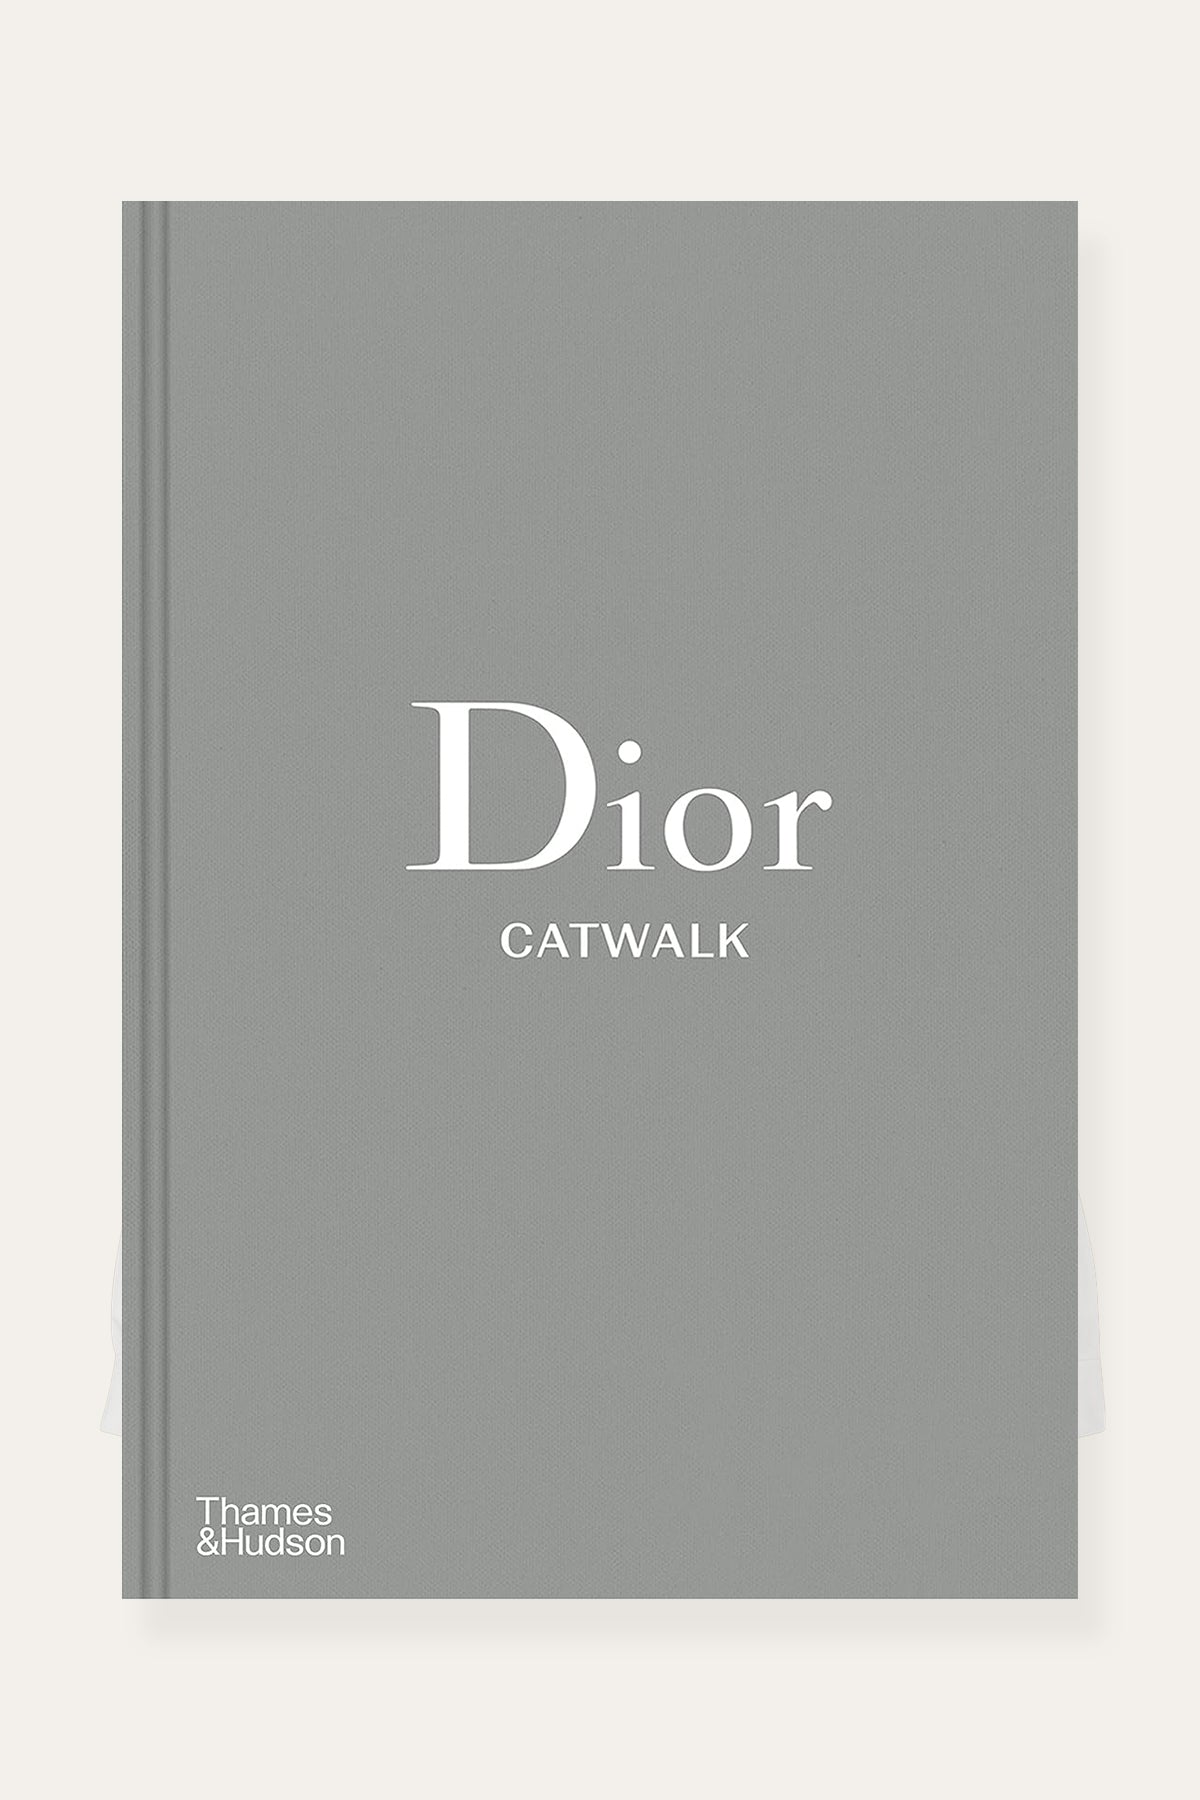 Remember When Christian Dior was an Anarchist? – CR Fashion Book